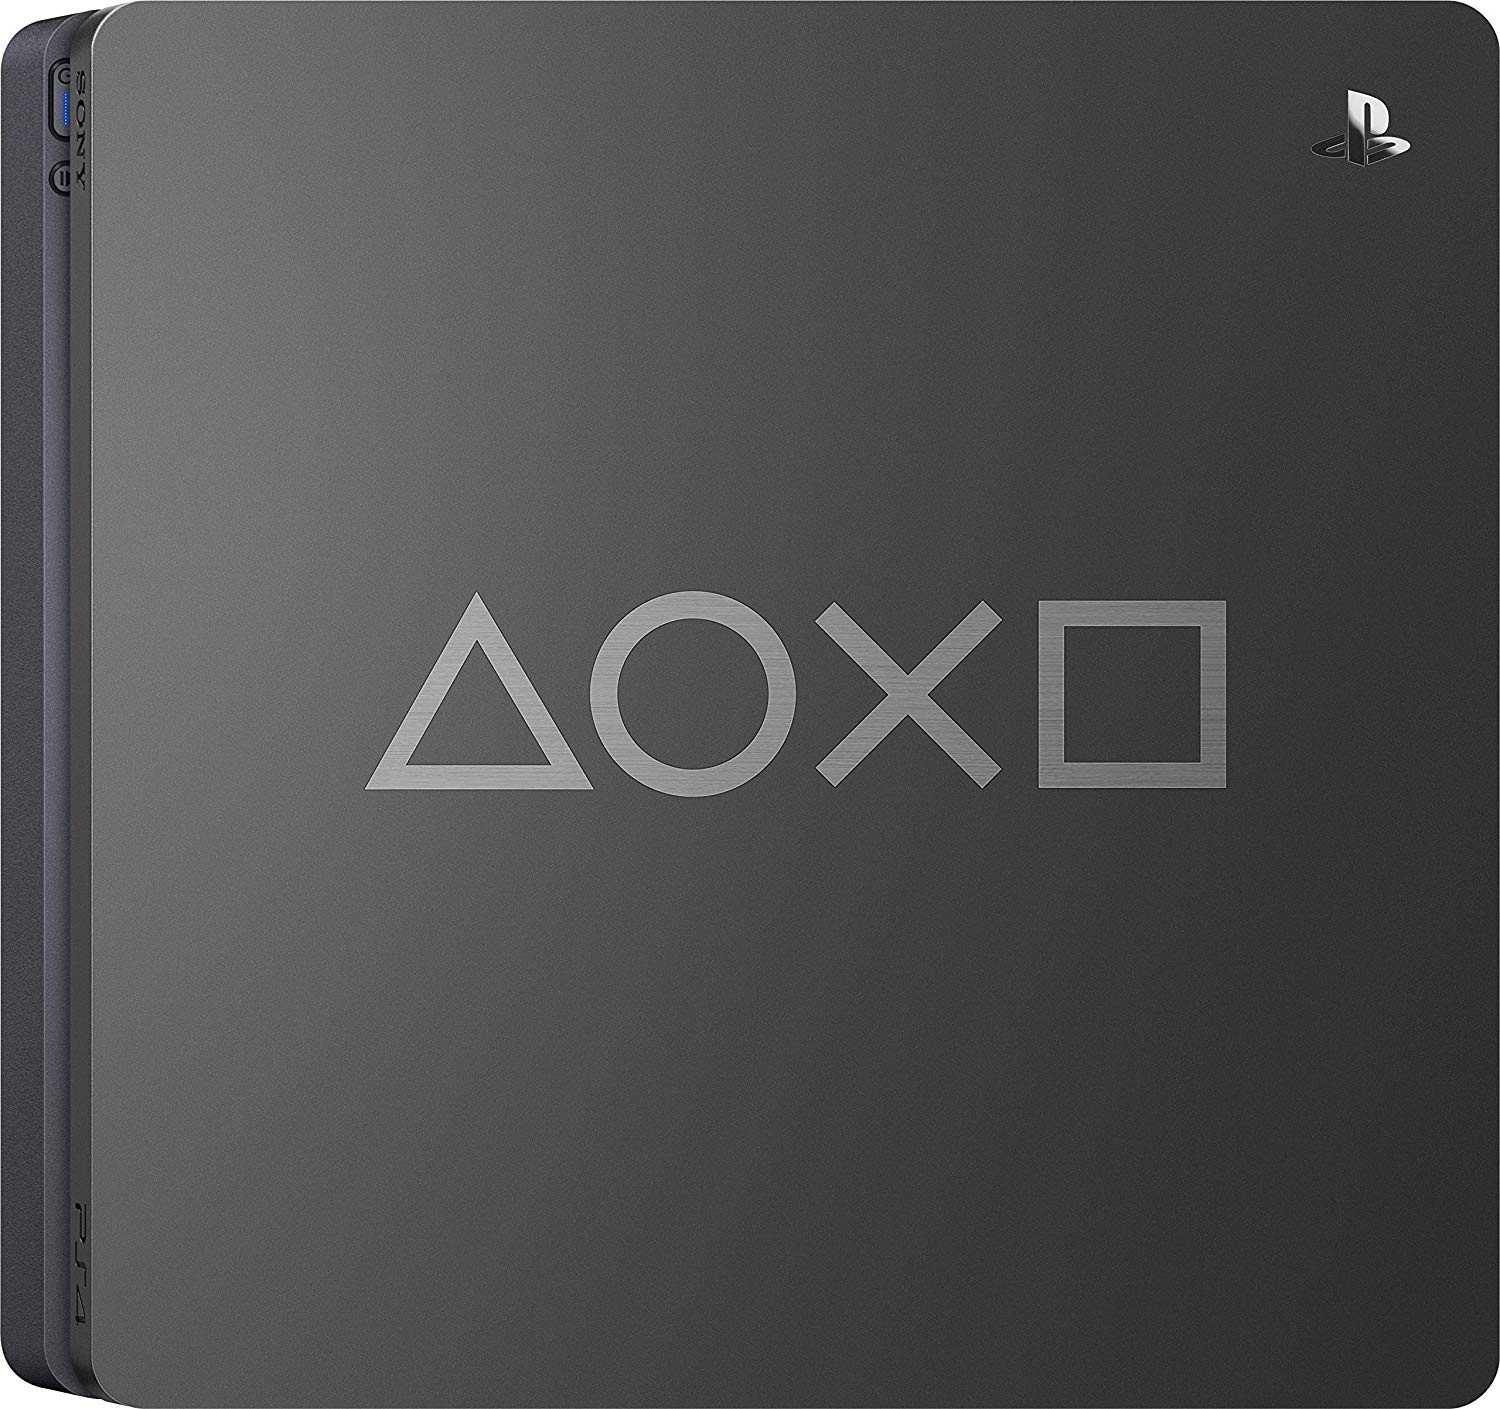 PlayStation 4 Slim 500GB Days of Play Limited Edition  - PlayStation 4 Gépek